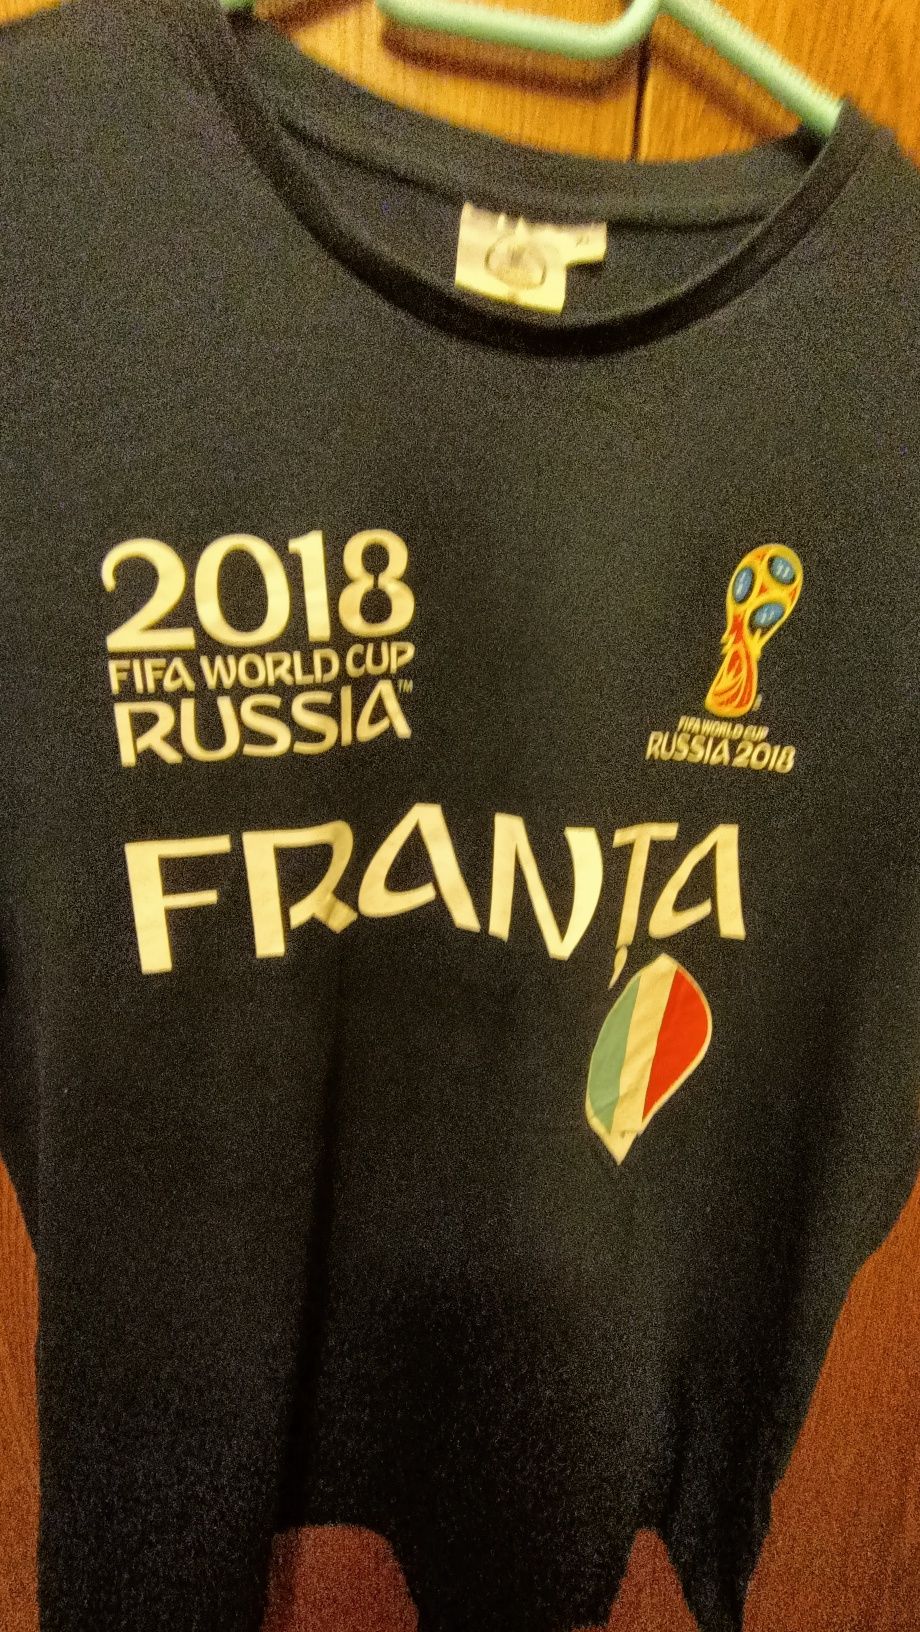 Tricou Franta 2018 - campioana mondiala  - de colectie!!!